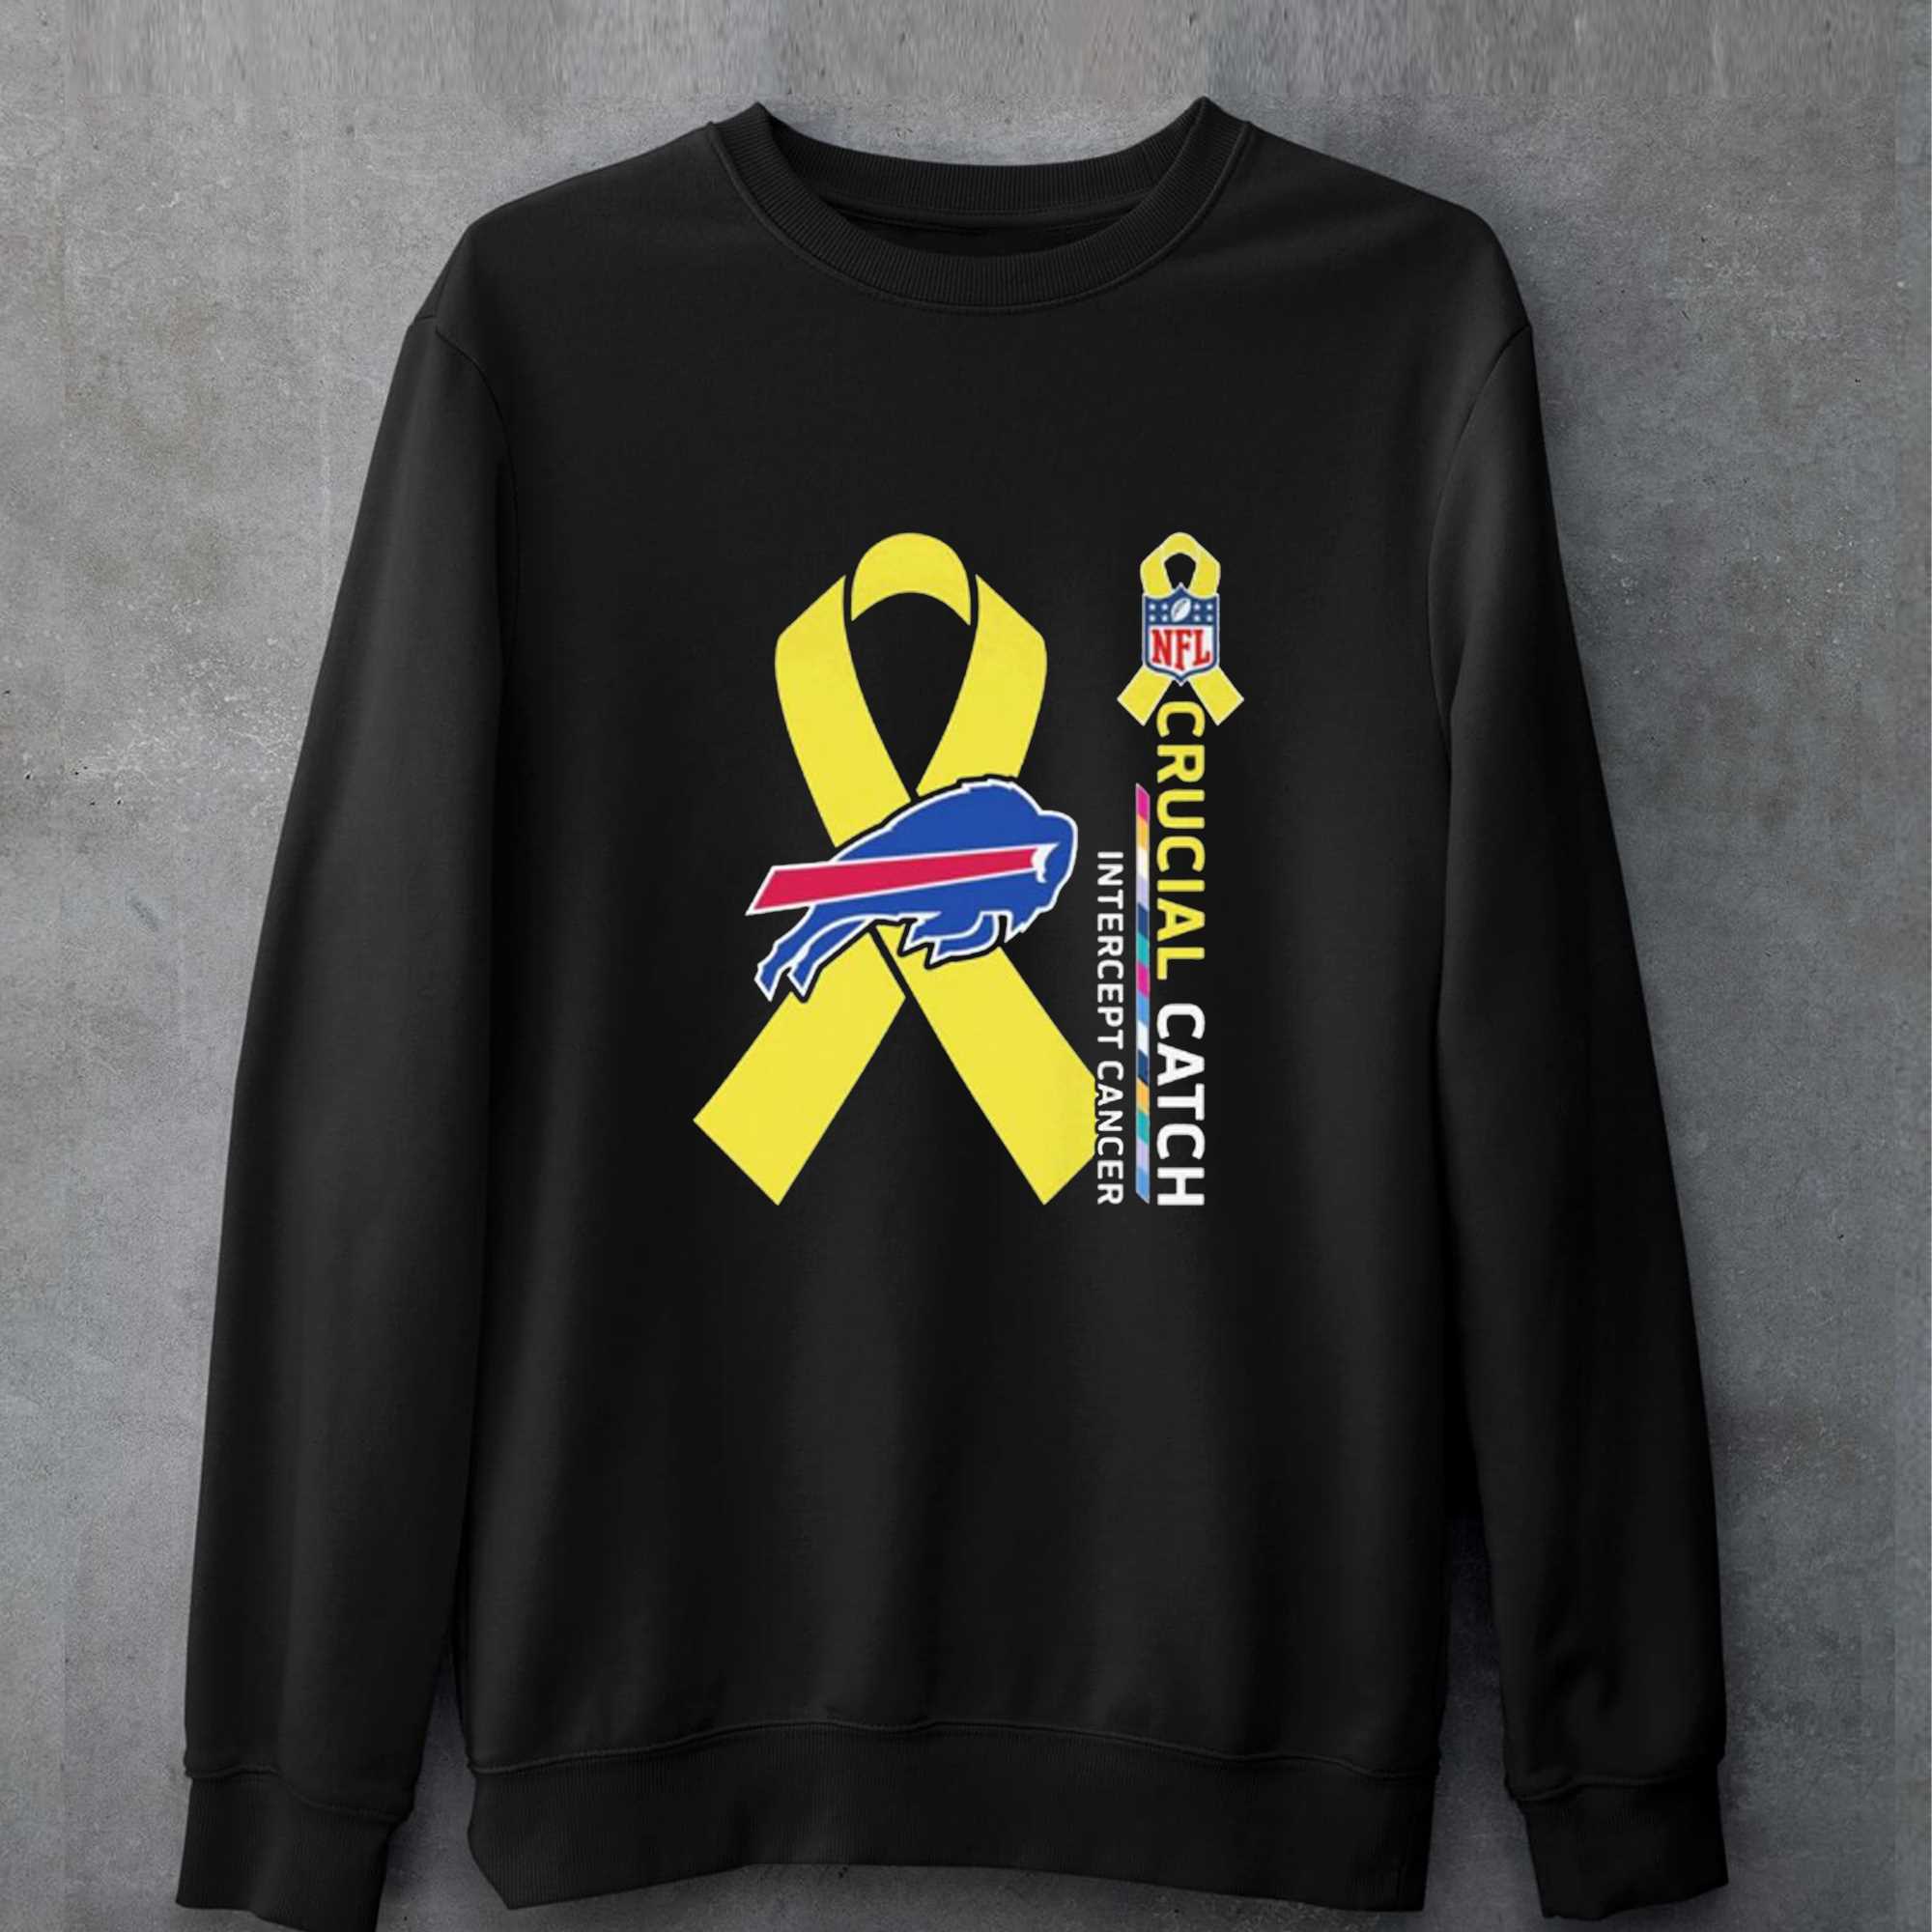 women intercept cancer sweatshirt